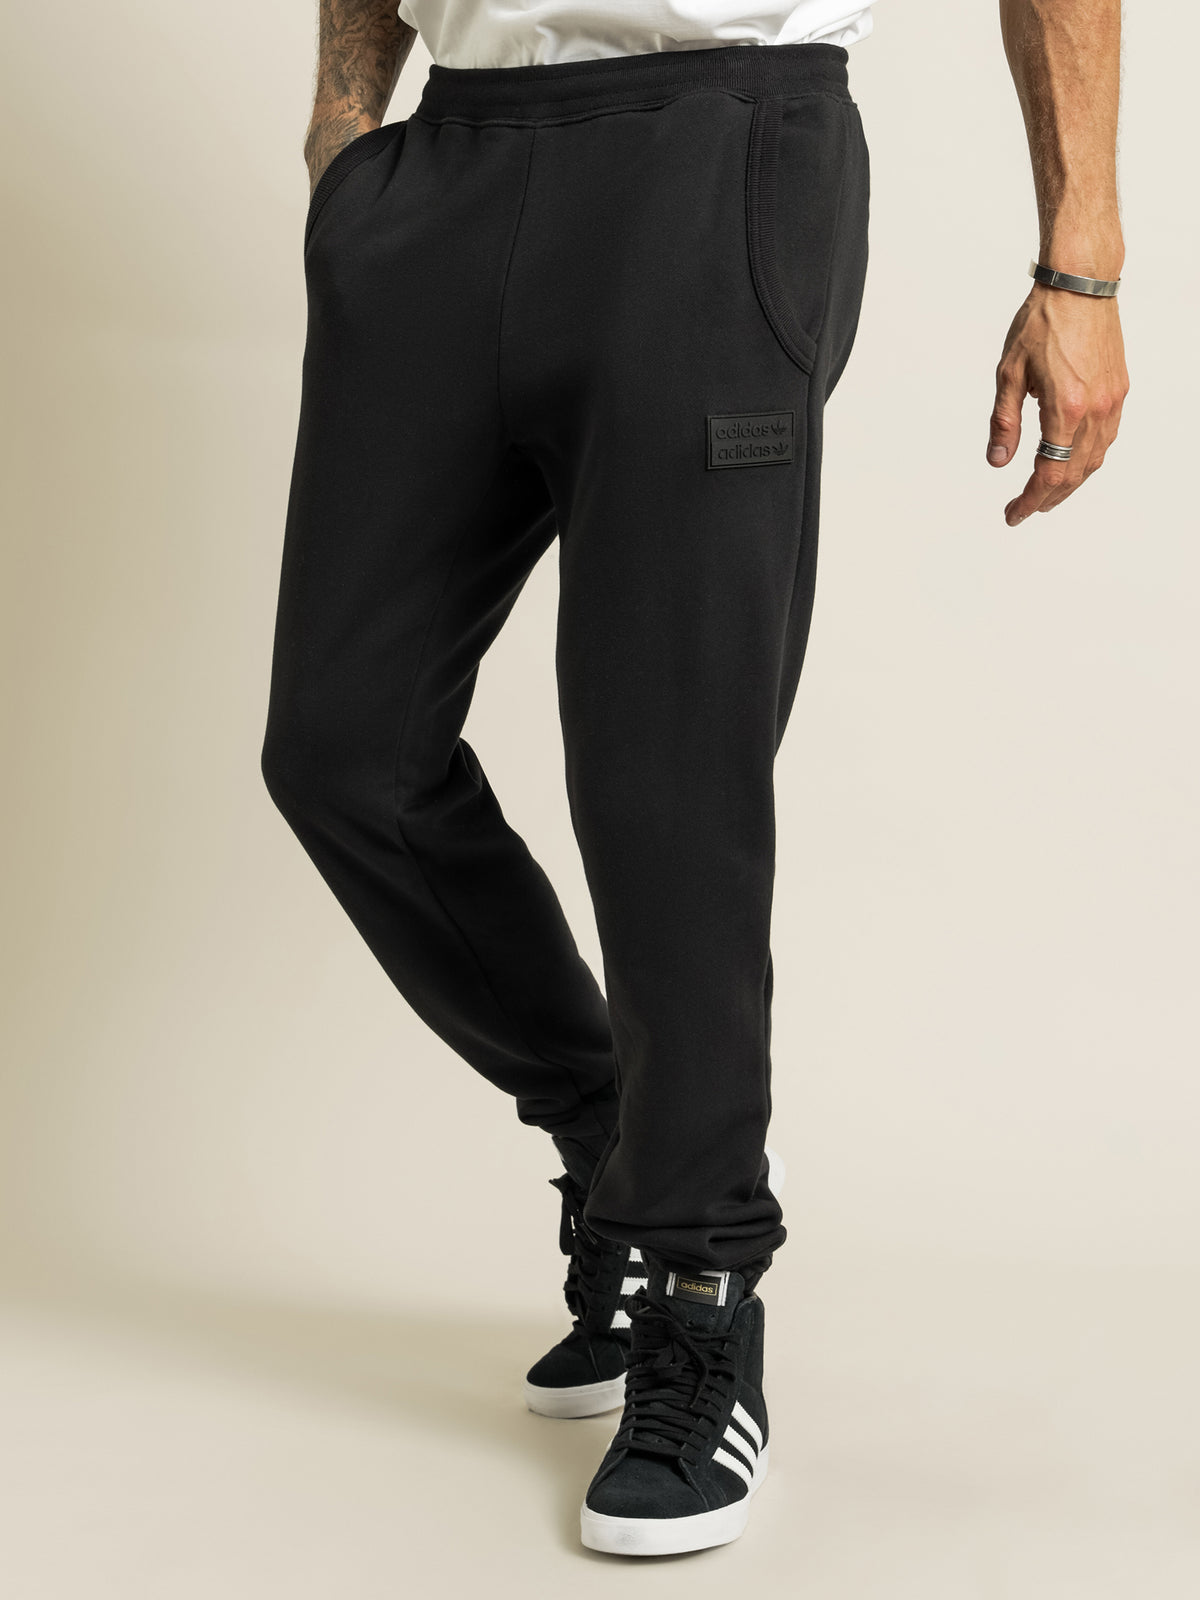 Silicone Sweatpants in Black